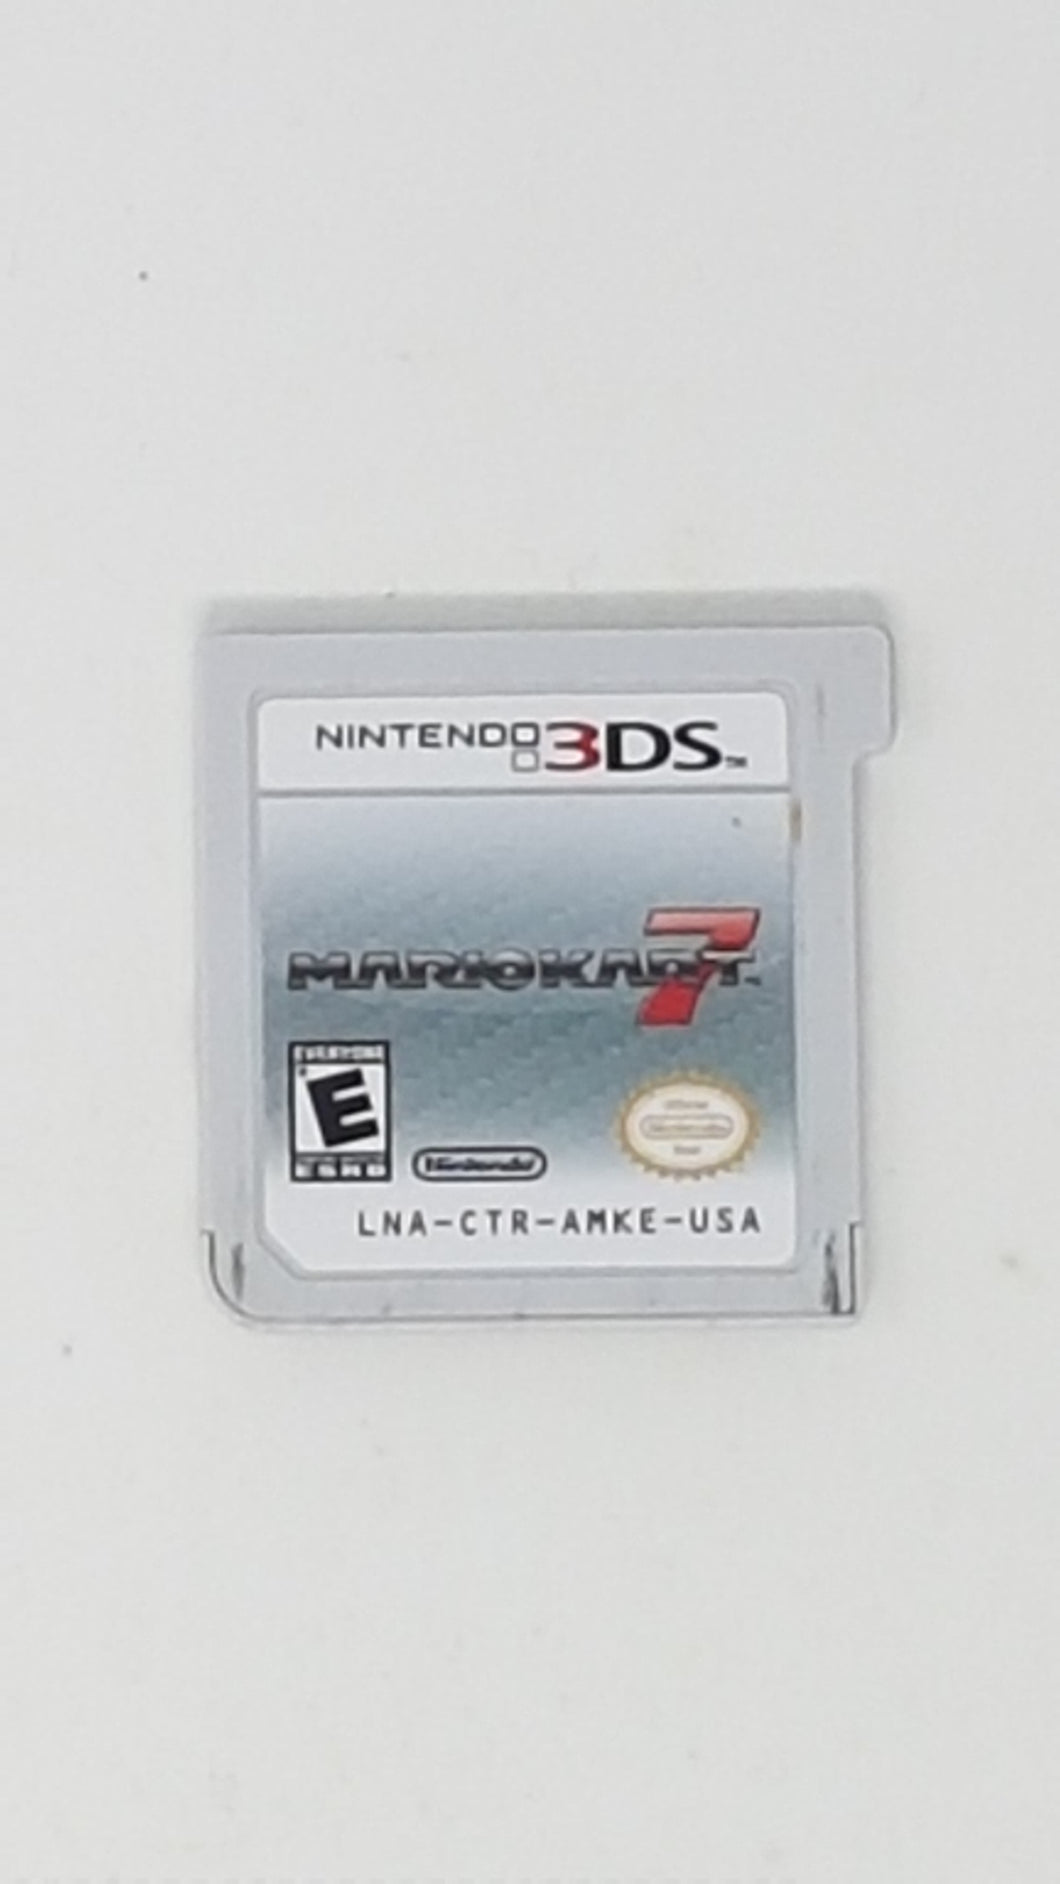 Mario Kart 7 - Nintendo 3DS